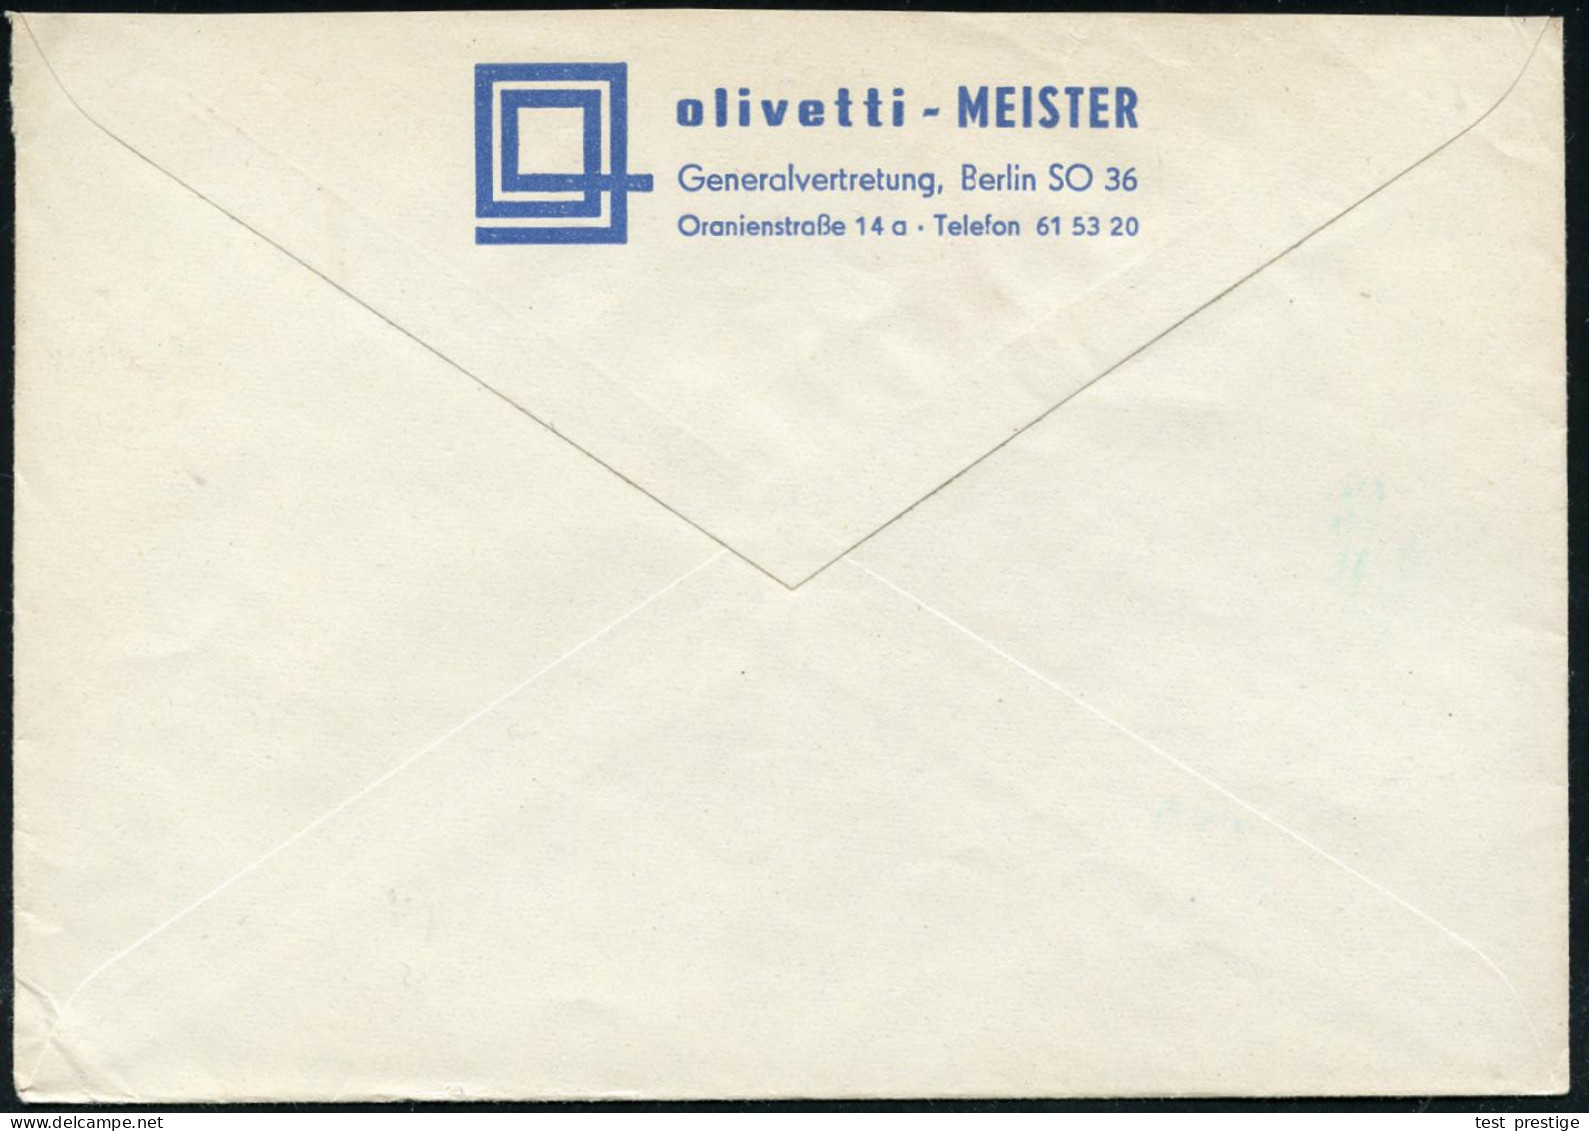 (1) BERLIN SO 36/ Meister/ BÜROMASCHINEN/ Olivetti Generalvertretung 1960 (21.12.) AFS Postalia Auf Orts-Firmen-Bf., Rs, - Otros